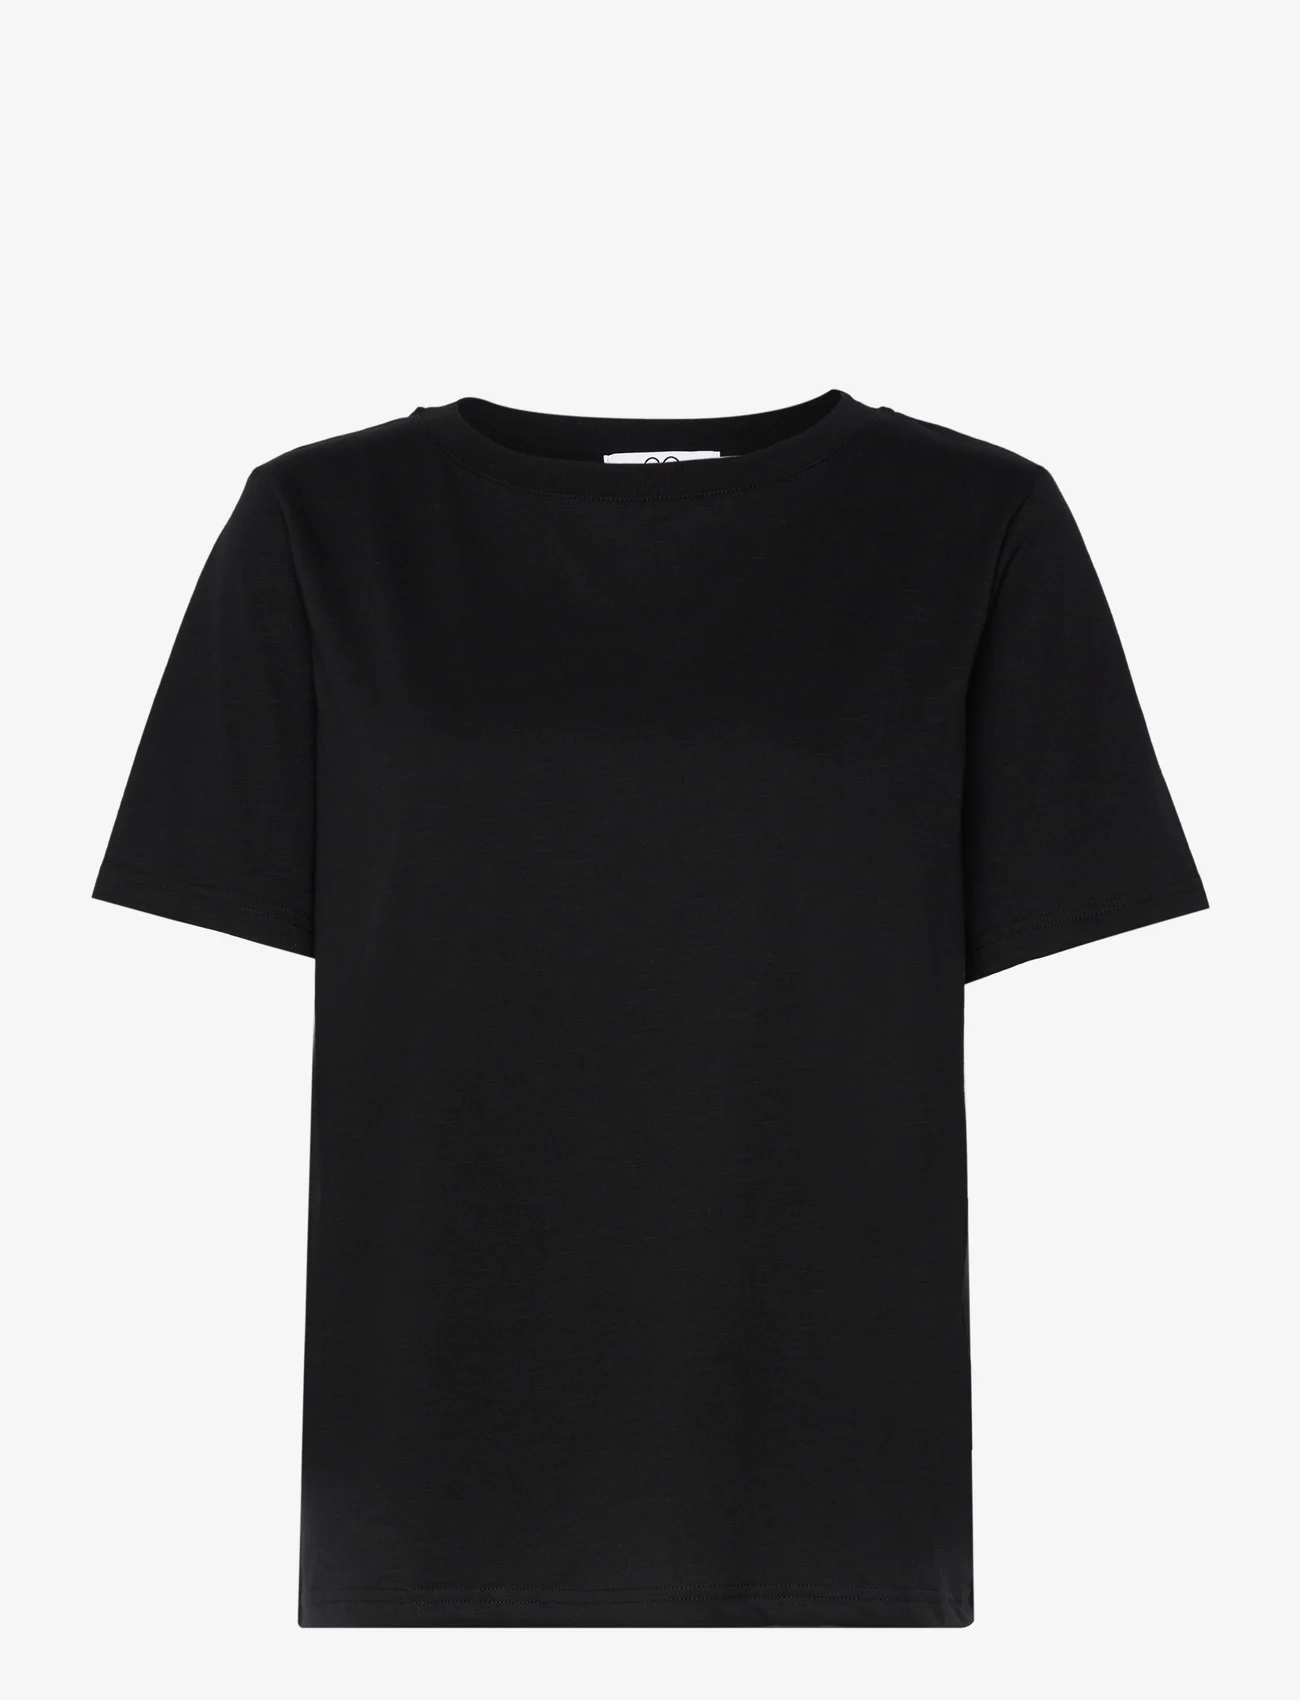 Coster Copenhagen - CC Heart regular t-shirt - lowest prices - black - 0